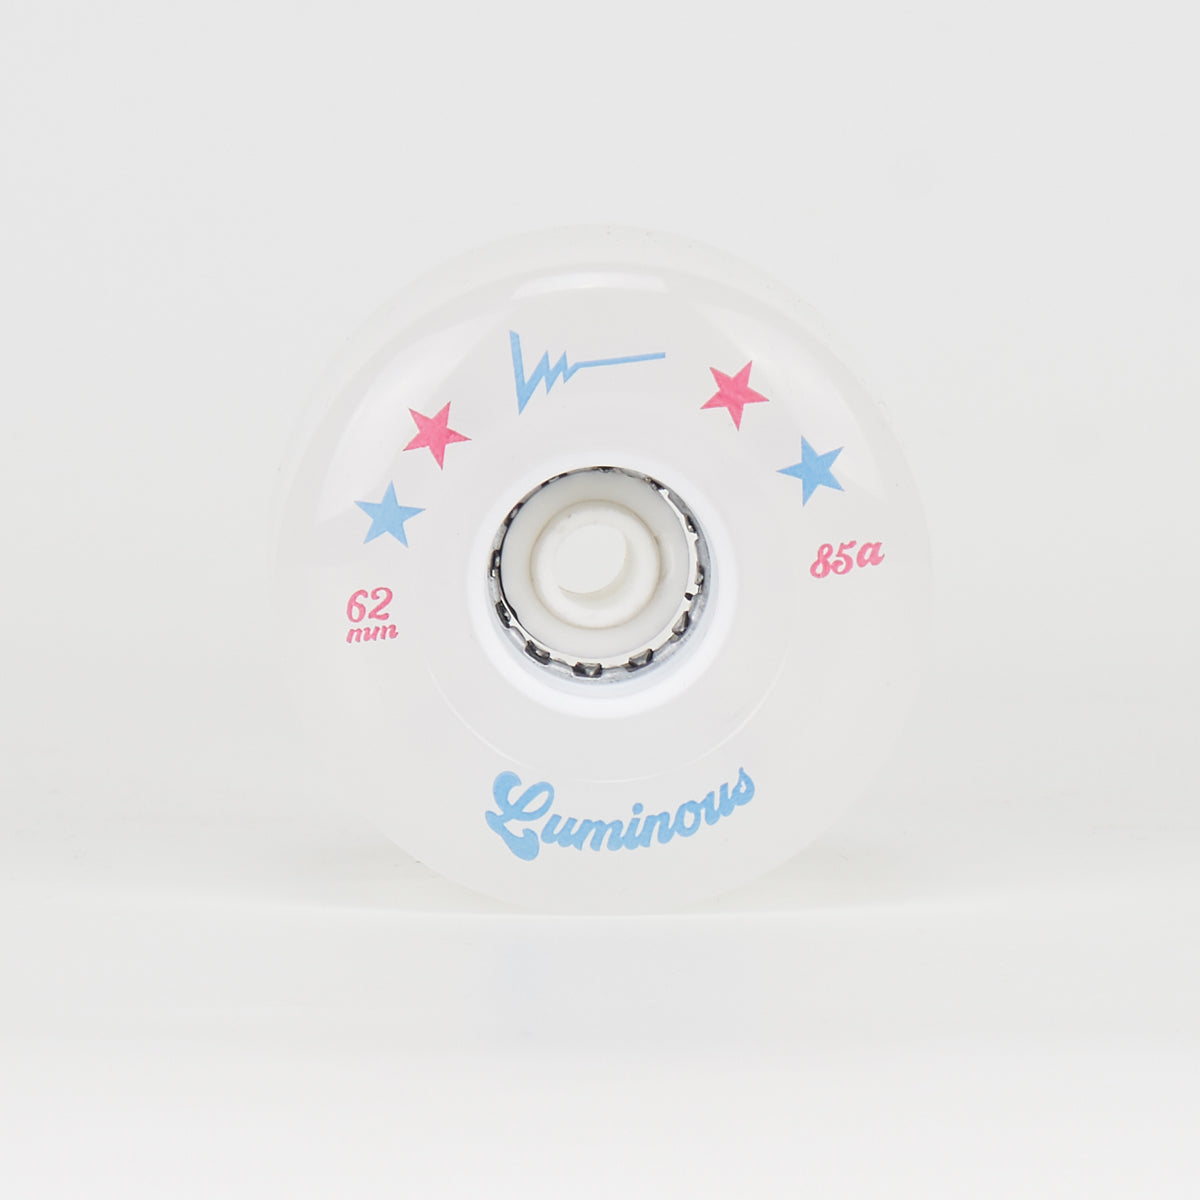 Luminous LED Light Up 62mm/85a Wheels - All stars (Singles)